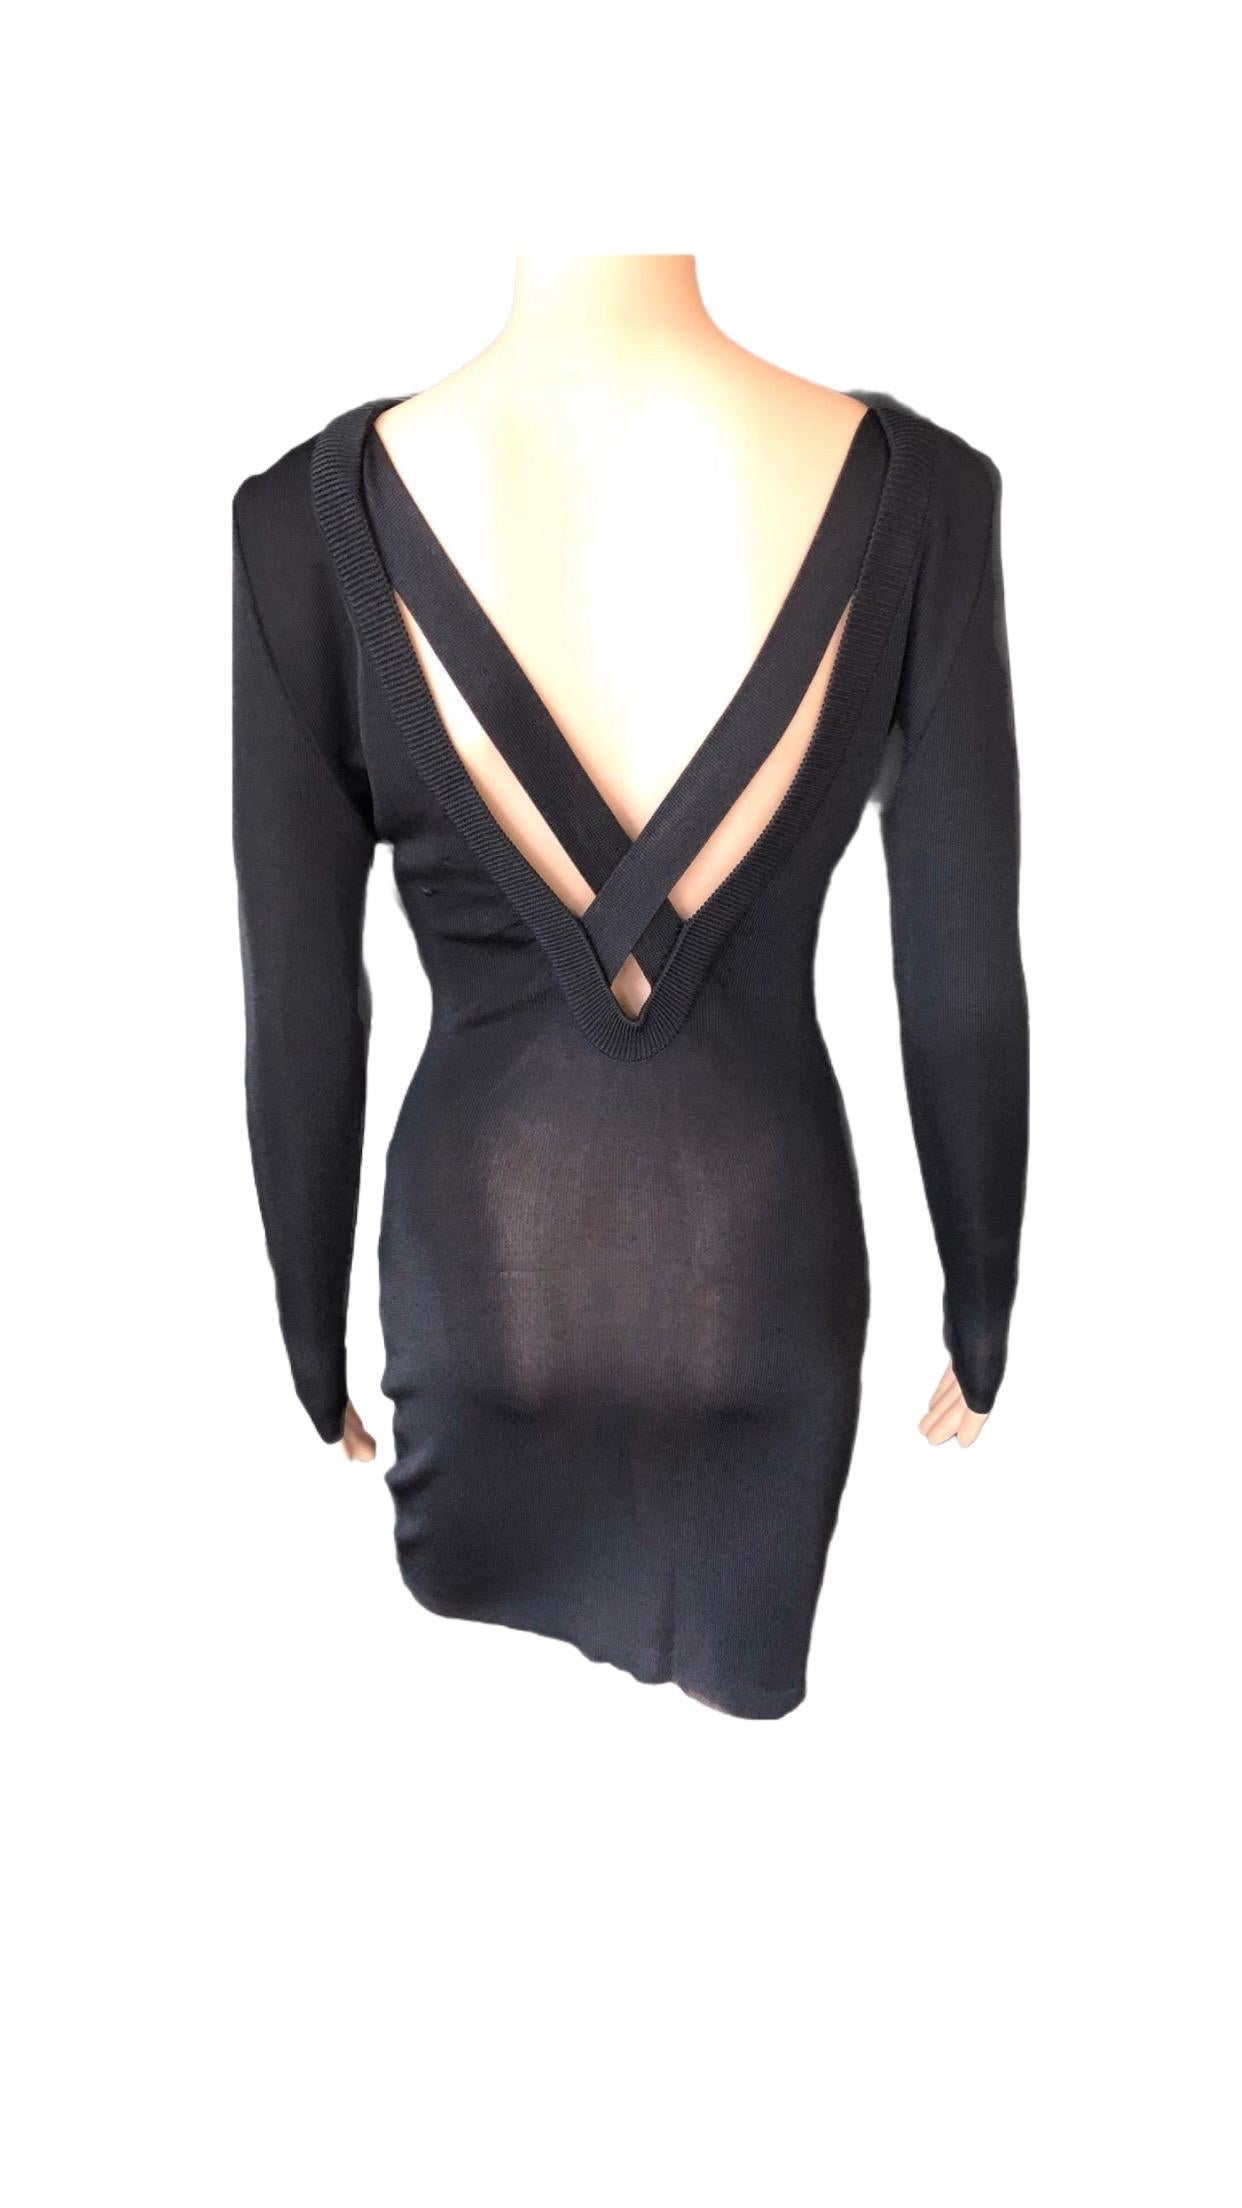 Gianni Versace c. 1980 Vintage Semi-Sheer Bodycon Knit Black Dress For Sale 7